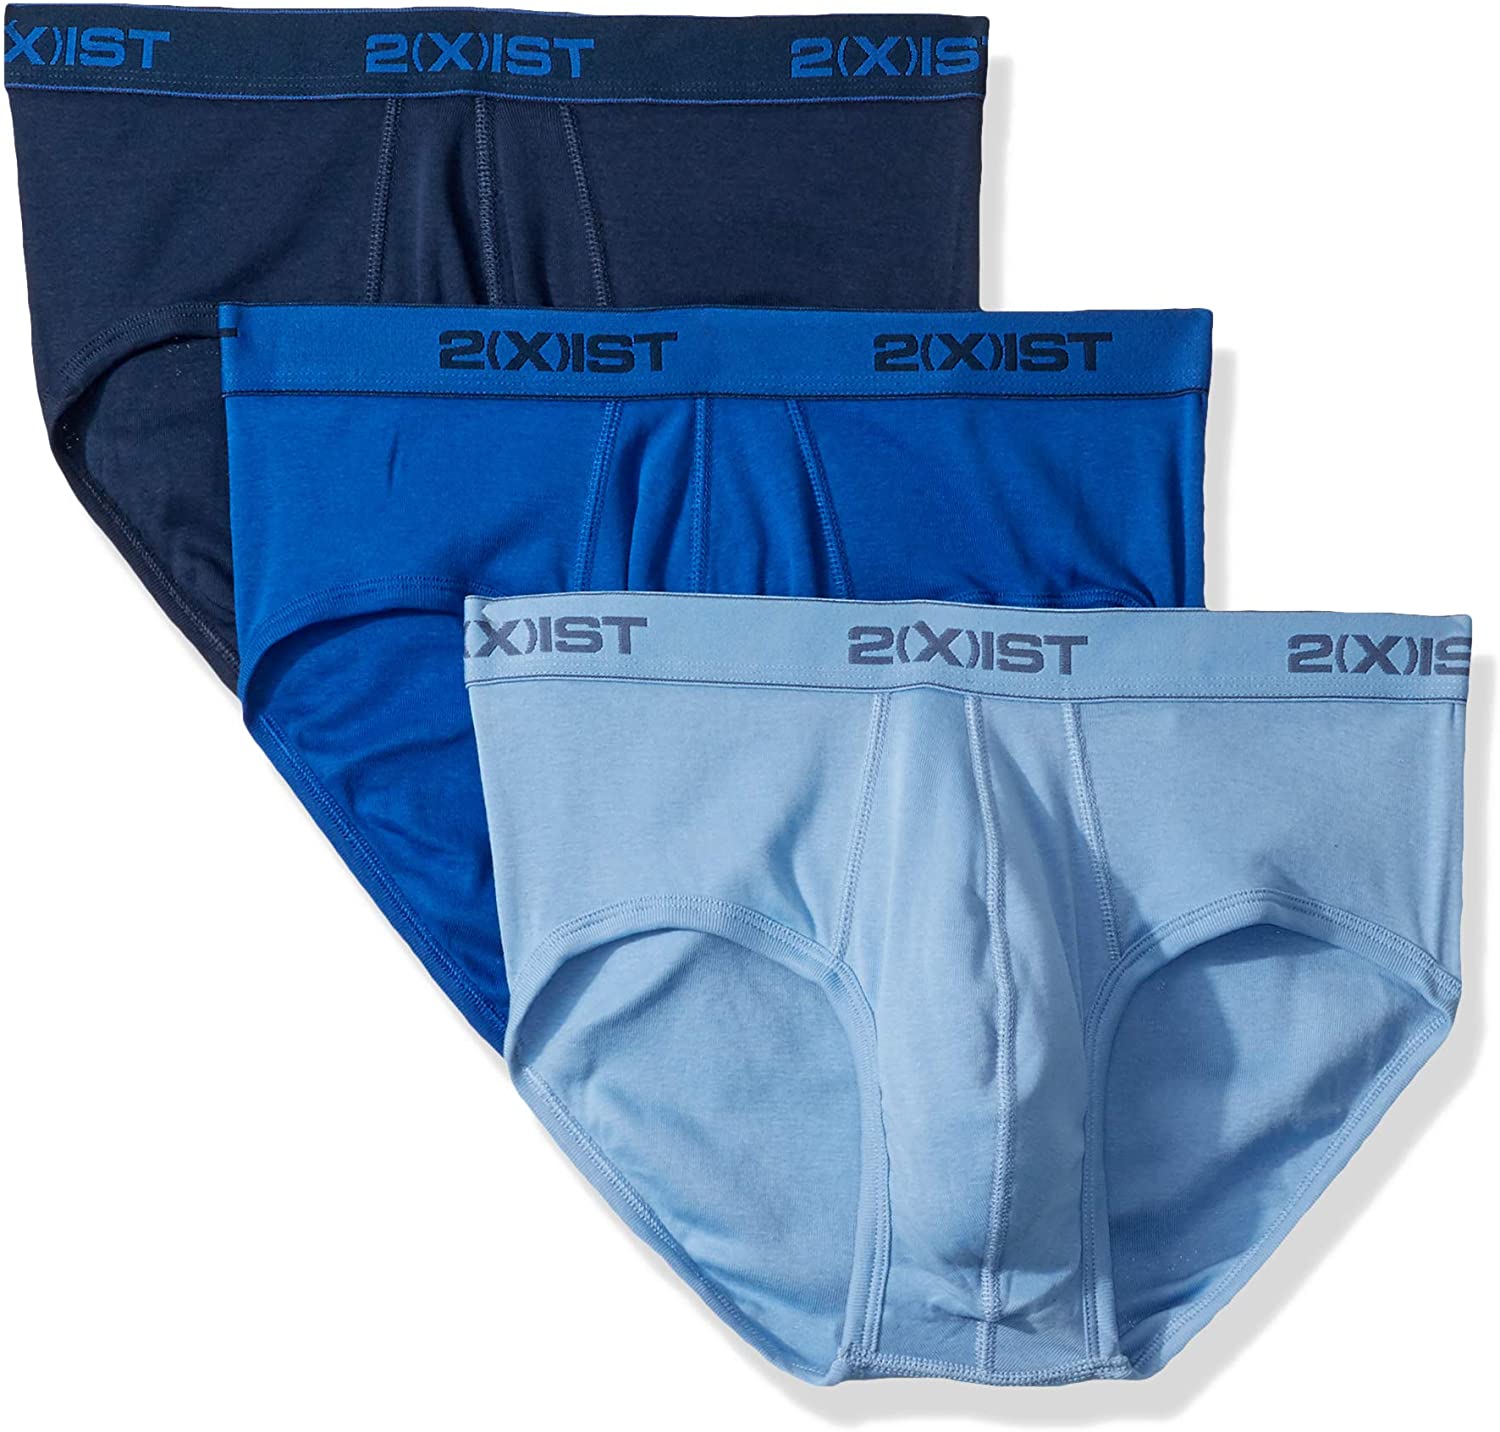 2(X)IST Men's 3-Pack Cotton Contour Pouch Brief | eBay